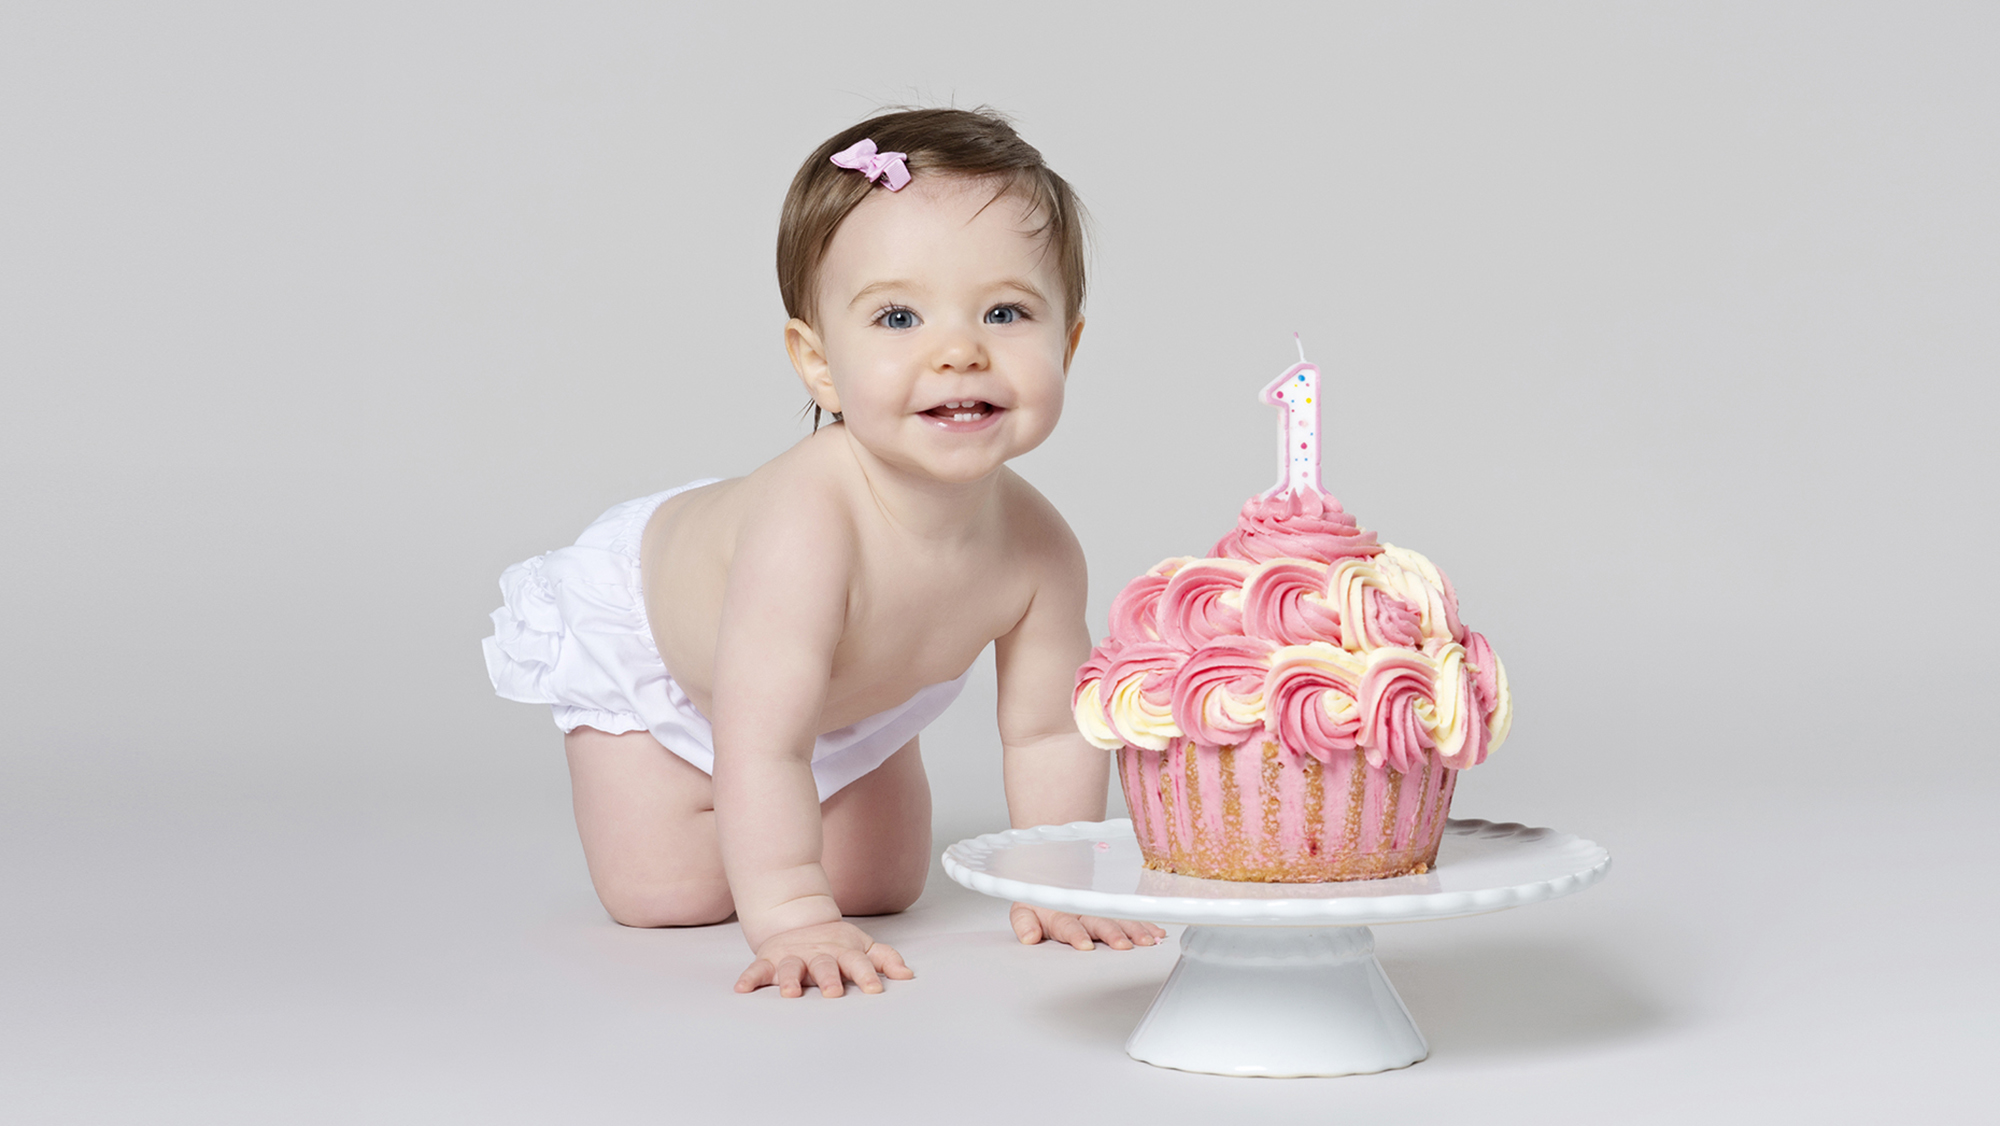 Cake Smash Girl Ideas | Orange County Newborn Photographer | Anaheim Hills  Baby Photographer | 714- 653- 2357